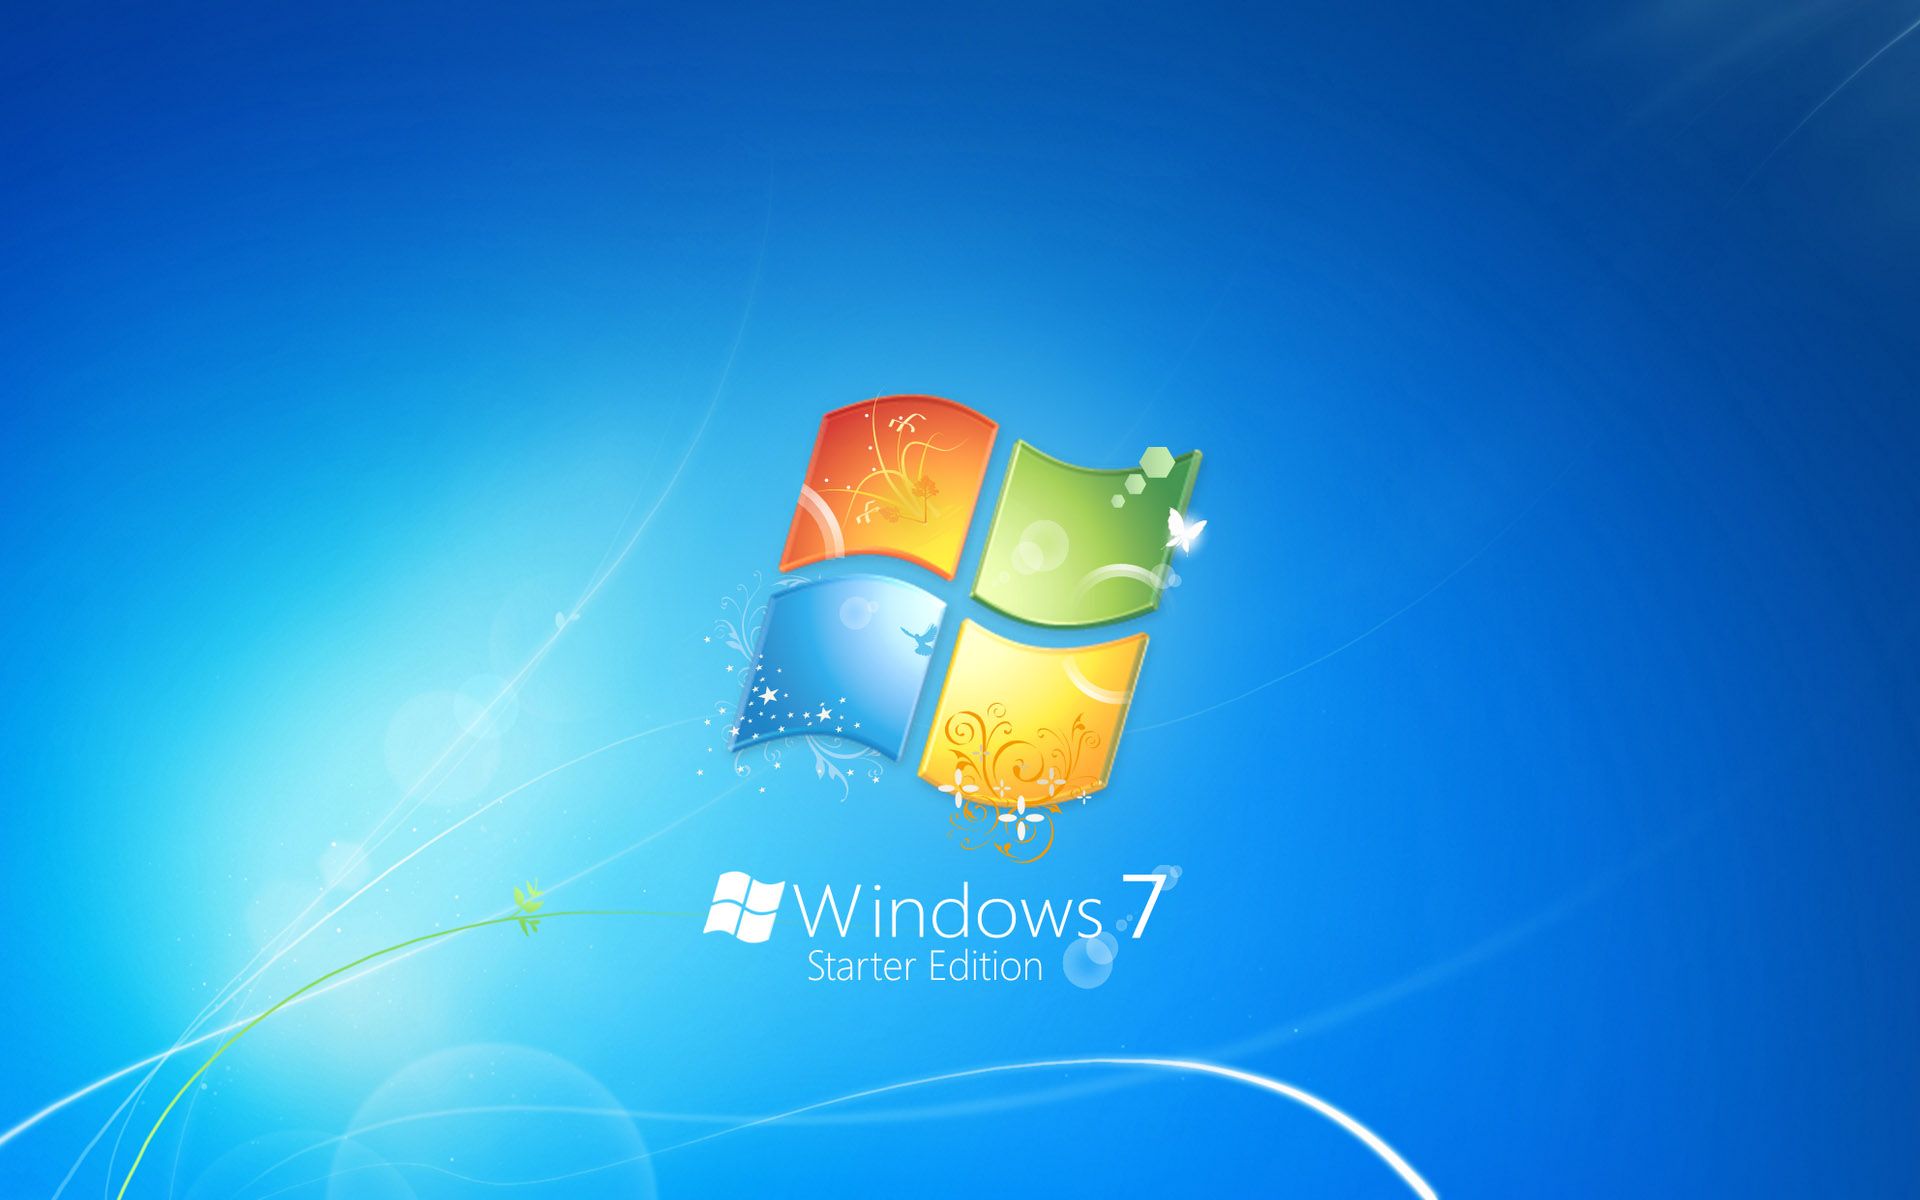 Windows 7 Starter Edition - Windows 7 fondo de pantalla (26875574) - fanpop